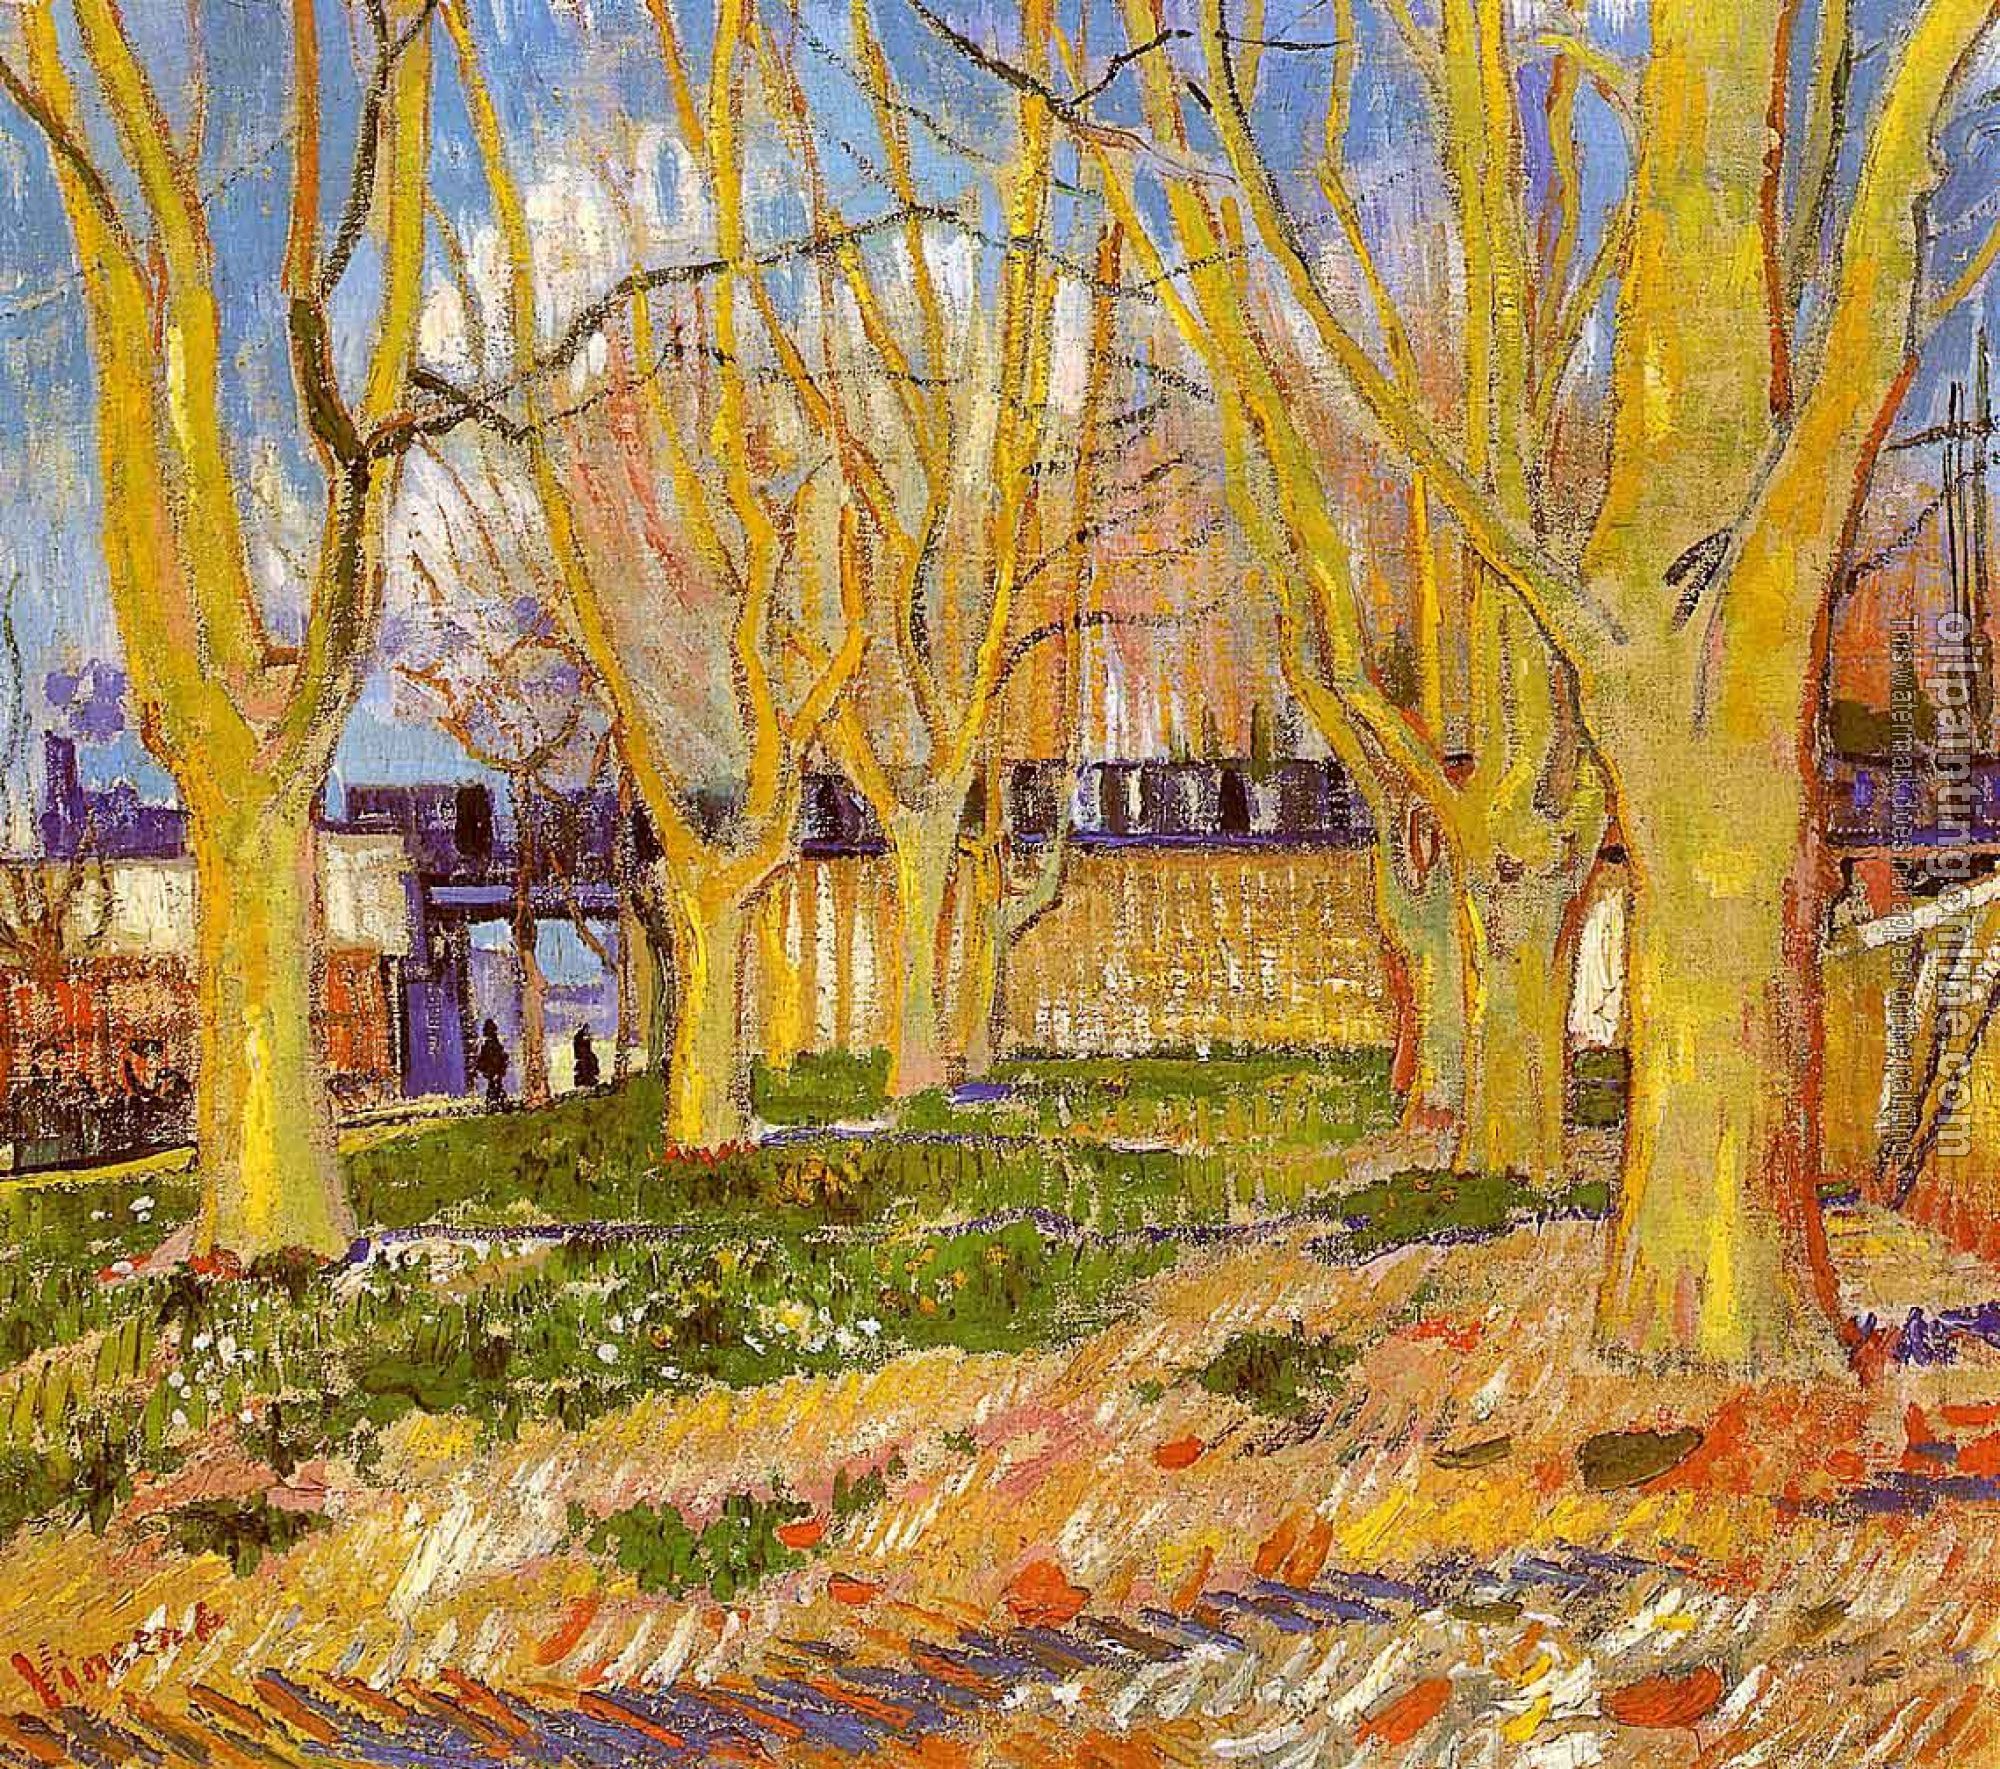 Gogh, Vincent van - Avenue of Plane Trees near Arles Station